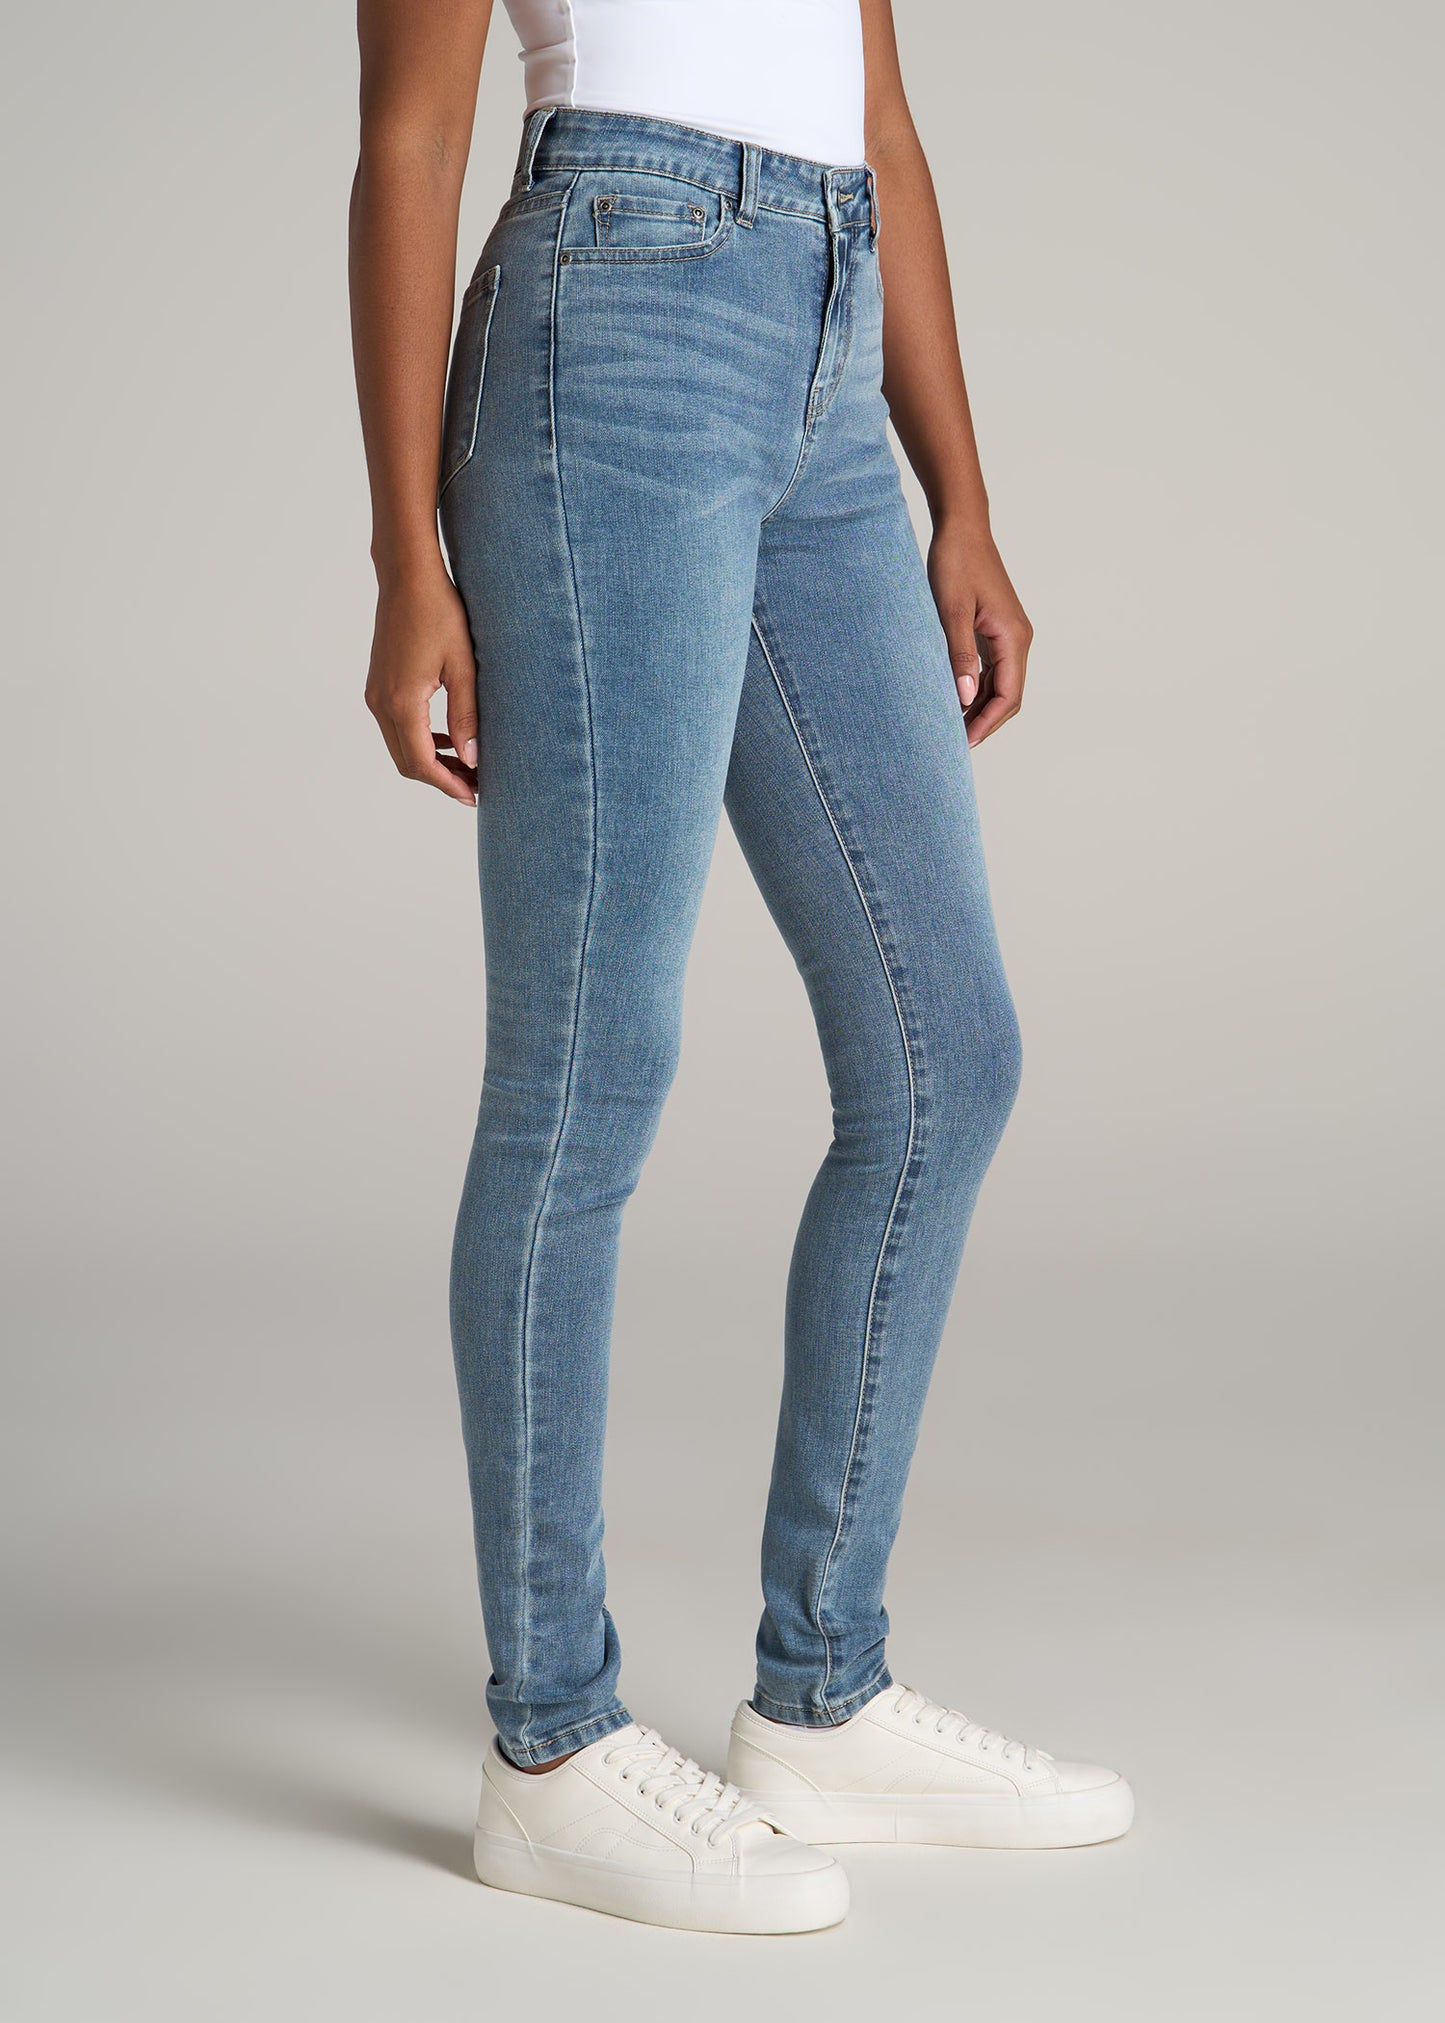 womens skinny jeans long leg